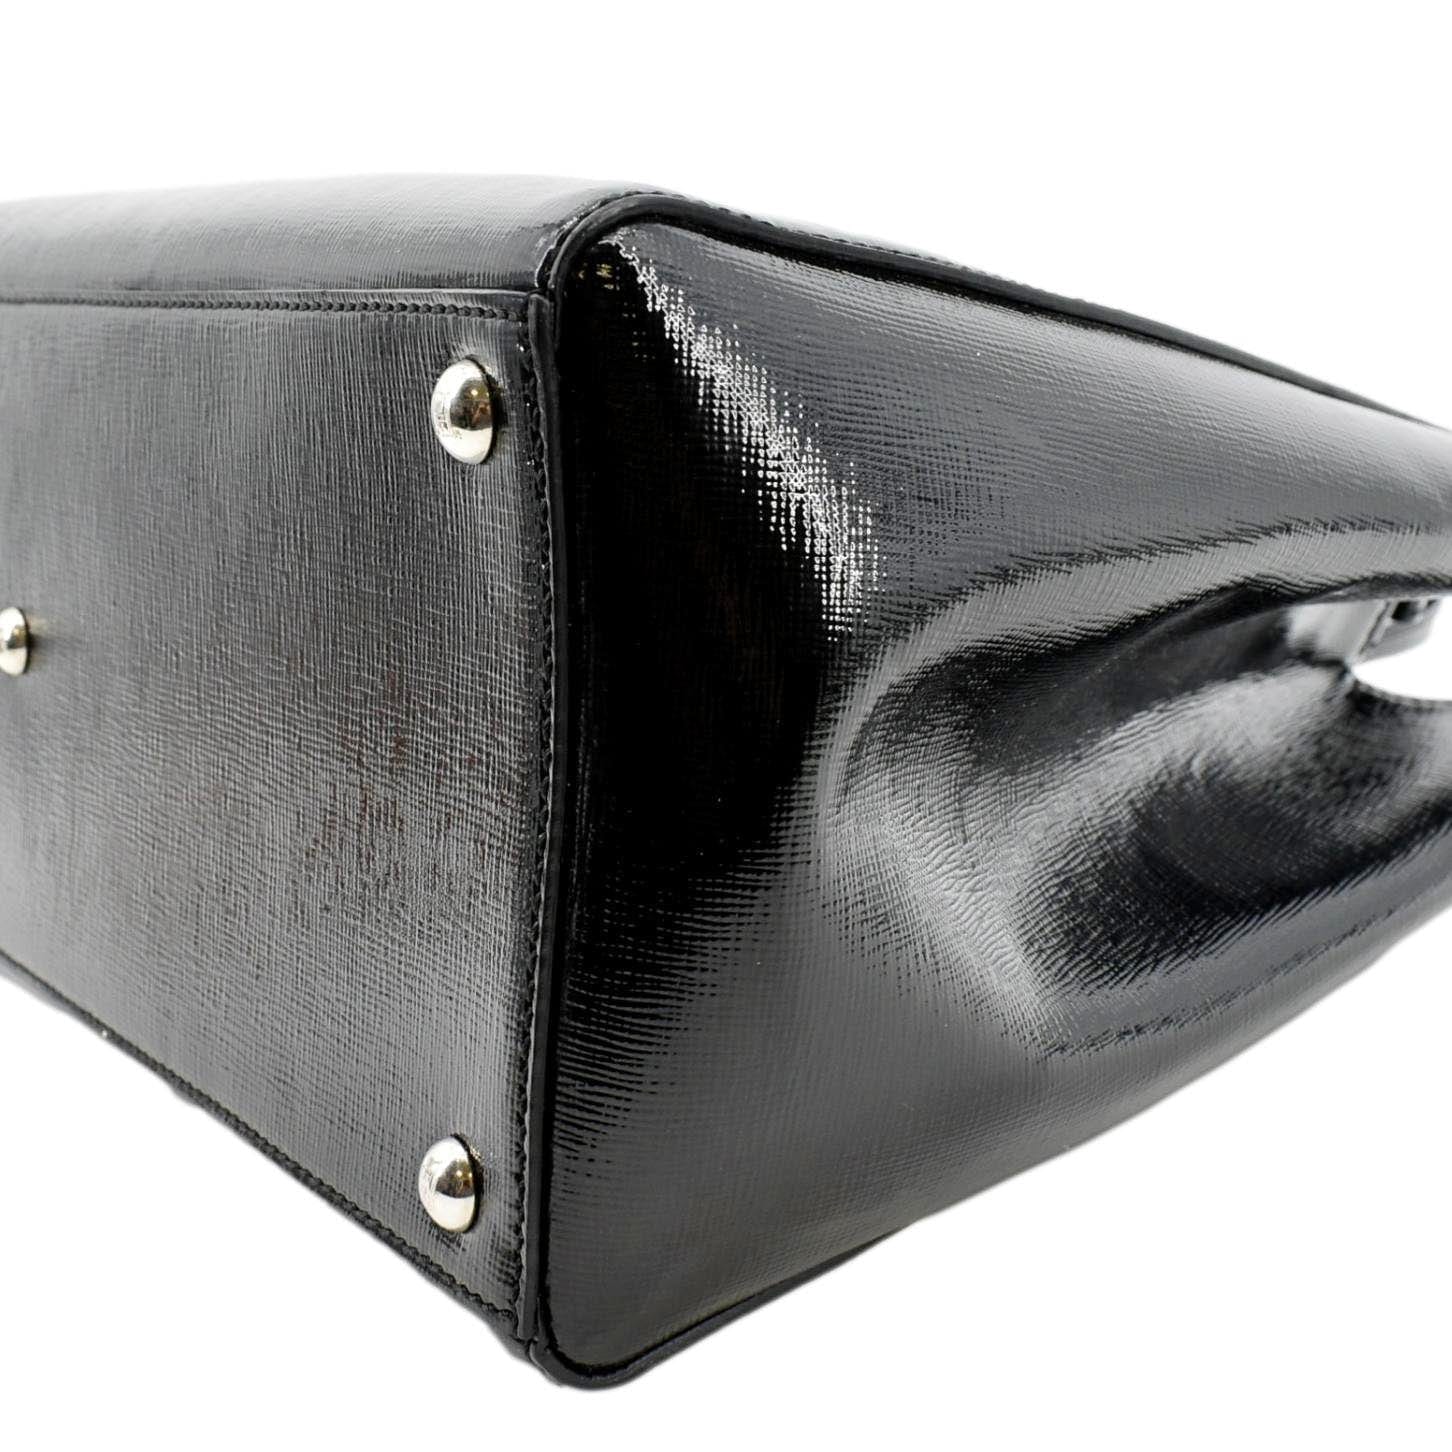 FENDI Black Patent Leather De Jour Tote Item#13526 – ALL YOUR BLISS